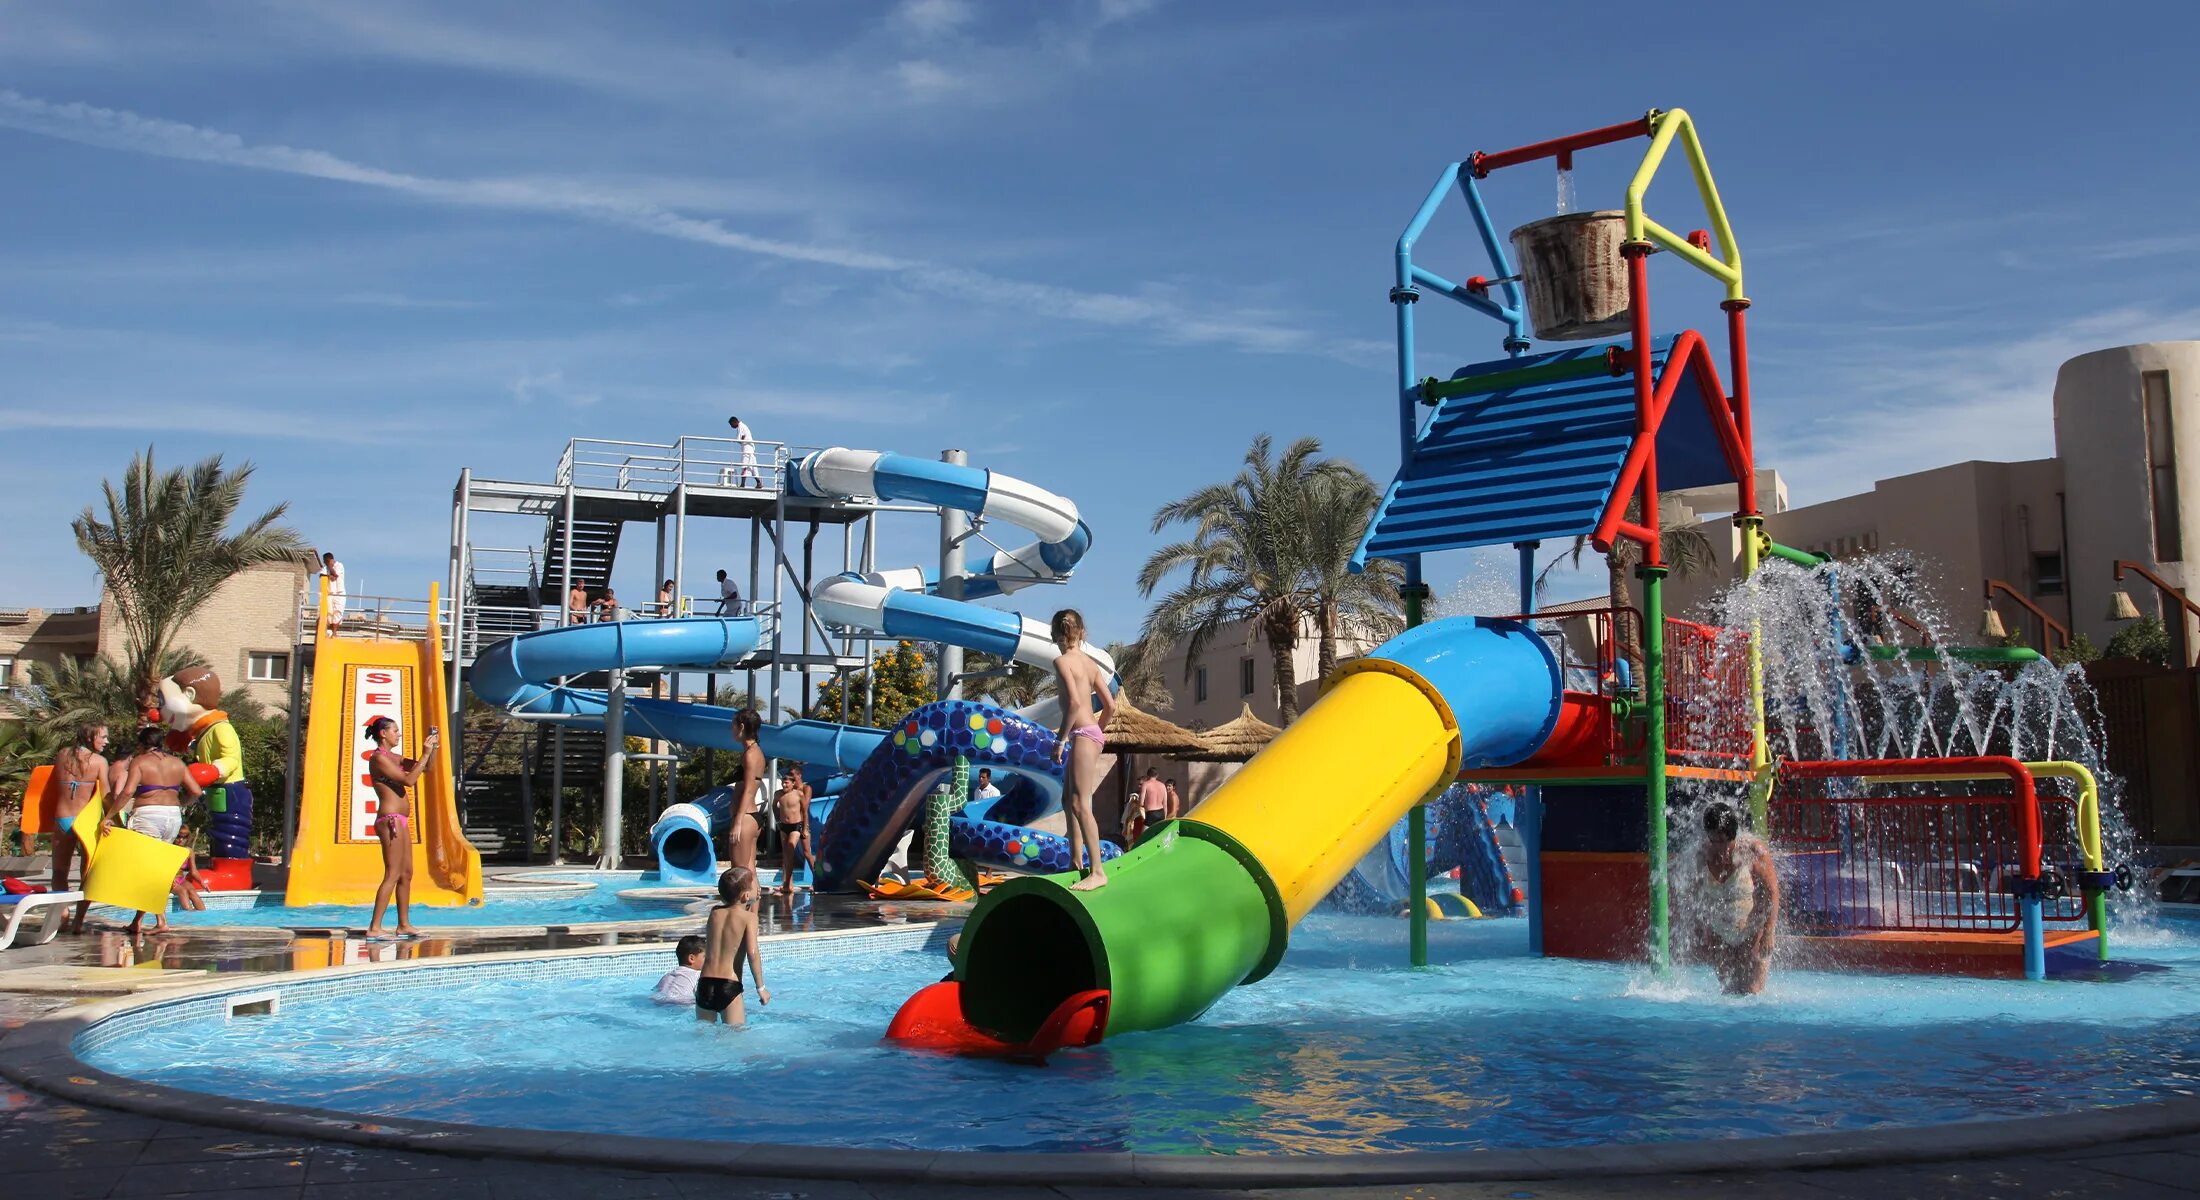 Hurghada seagull resort 4. Отель Seagull Beach Resort 4*. Отель Сигал Бич Резорт Хургада. Хургада отель Сигал 4. Хургада отель Seagull Beach Resort Club 4.